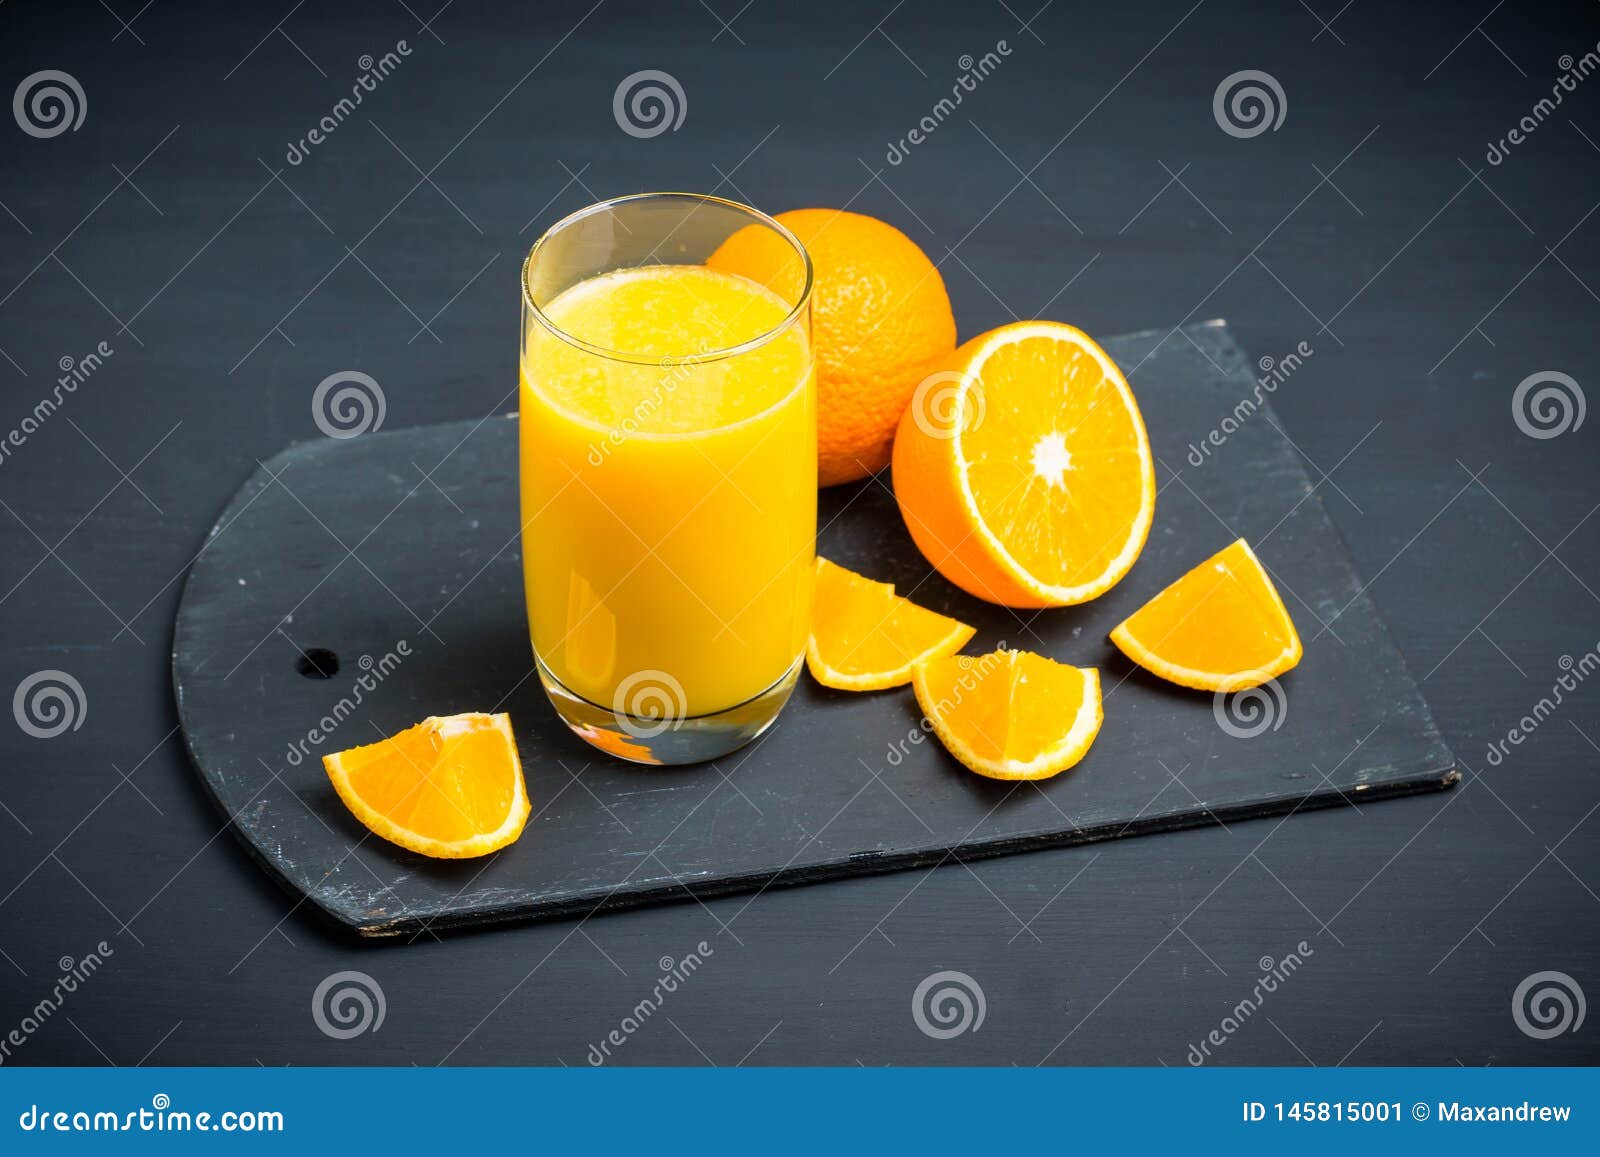 https://thumbs.dreamstime.com/z/fresh-squeezed-orange-juice-rustic-background-fresh-squeezed-orange-juice-rustic-background-selective-focus-shallow-145815001.jpg